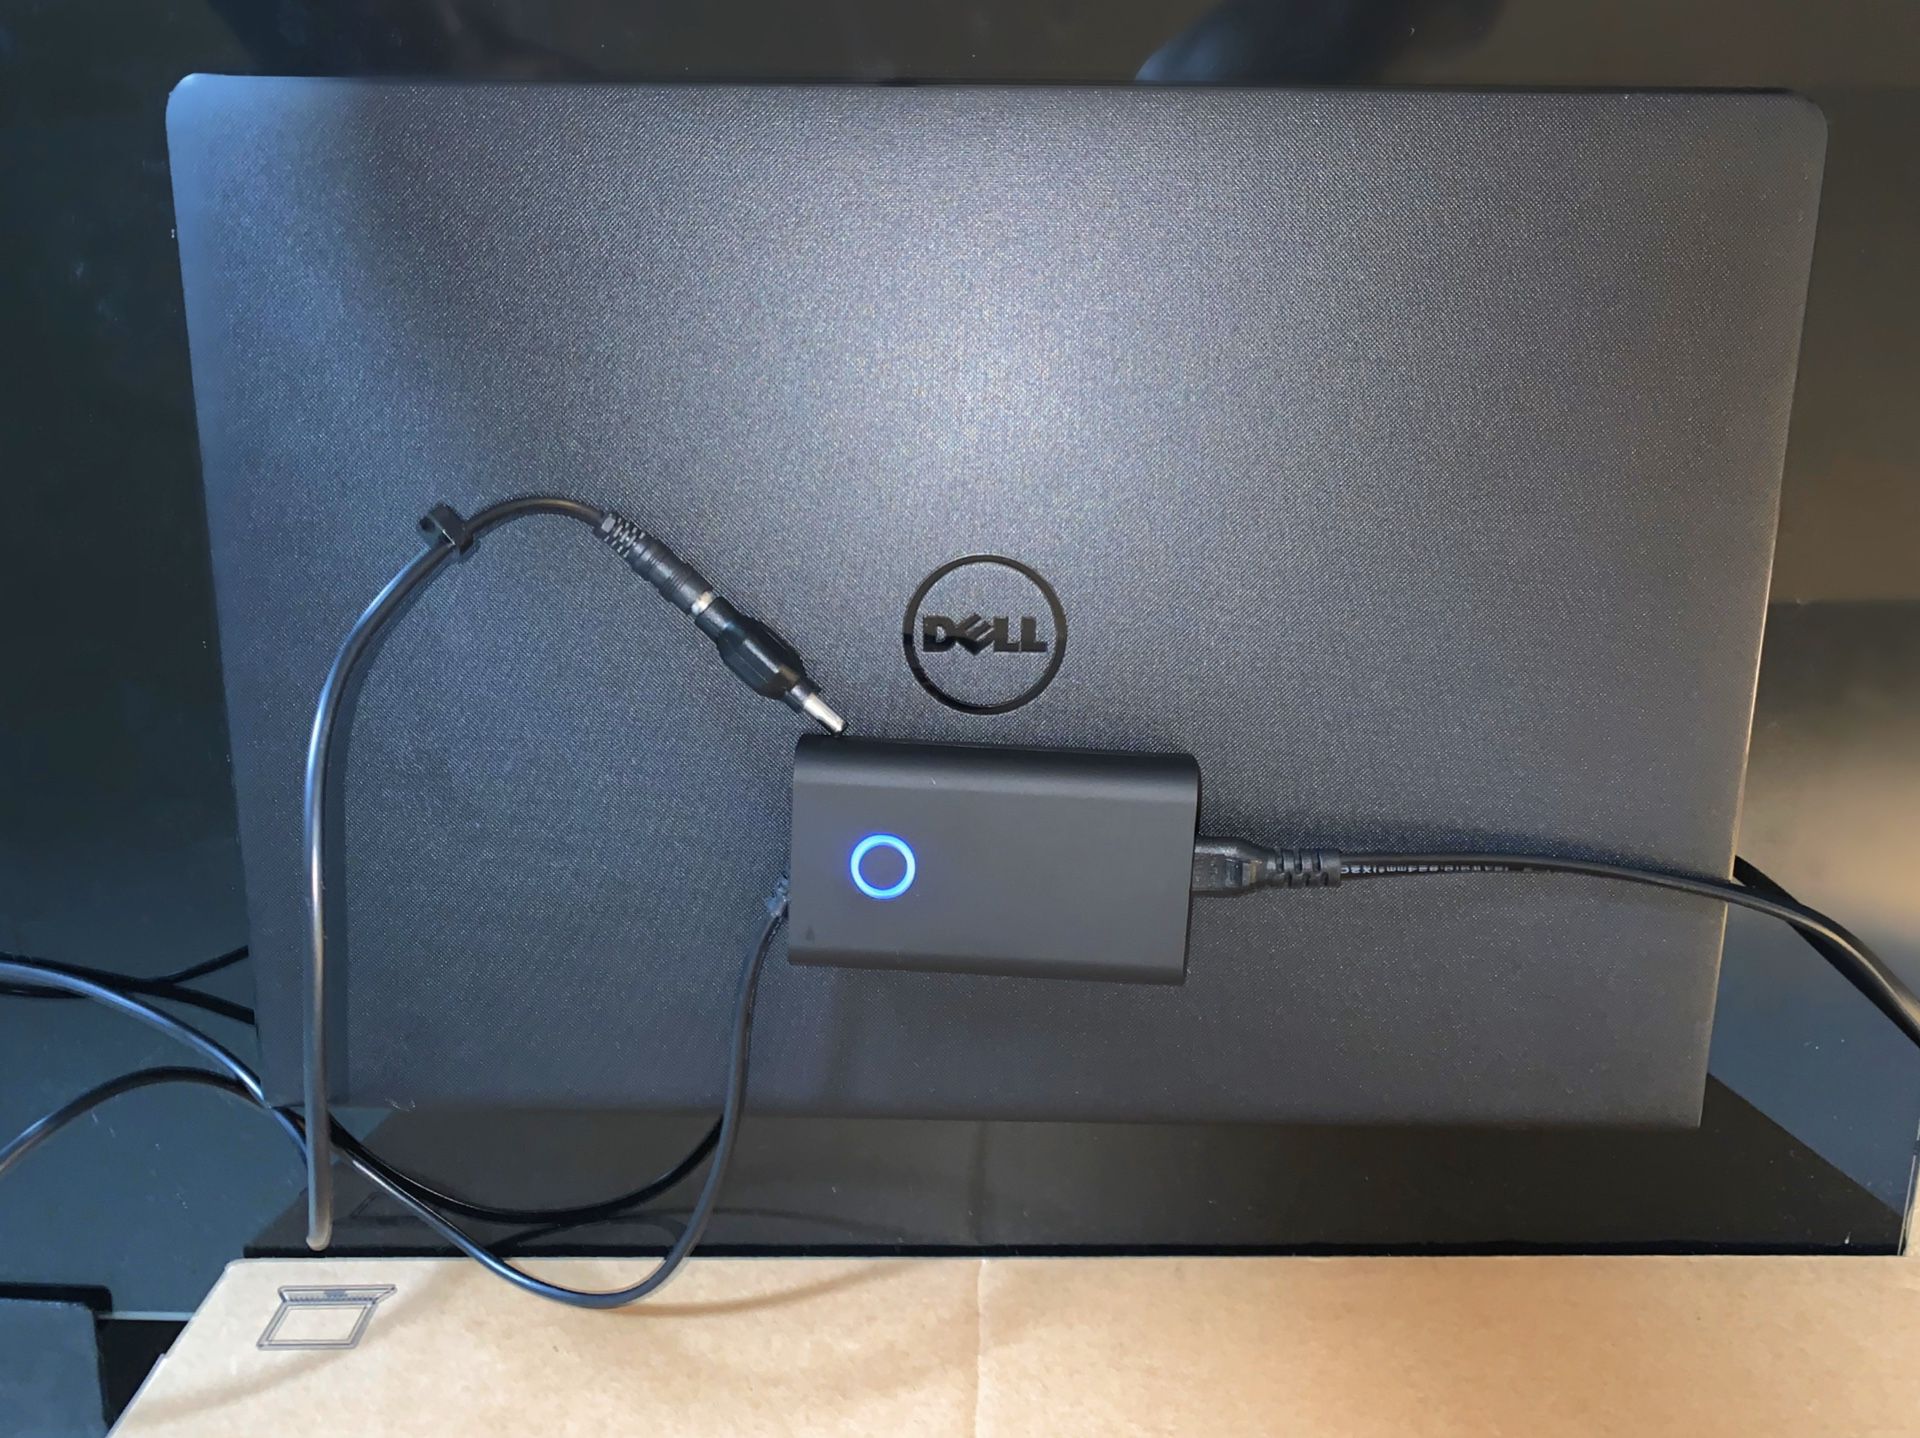 Dell Inspiron 15 Premium Touchscreen Laptop